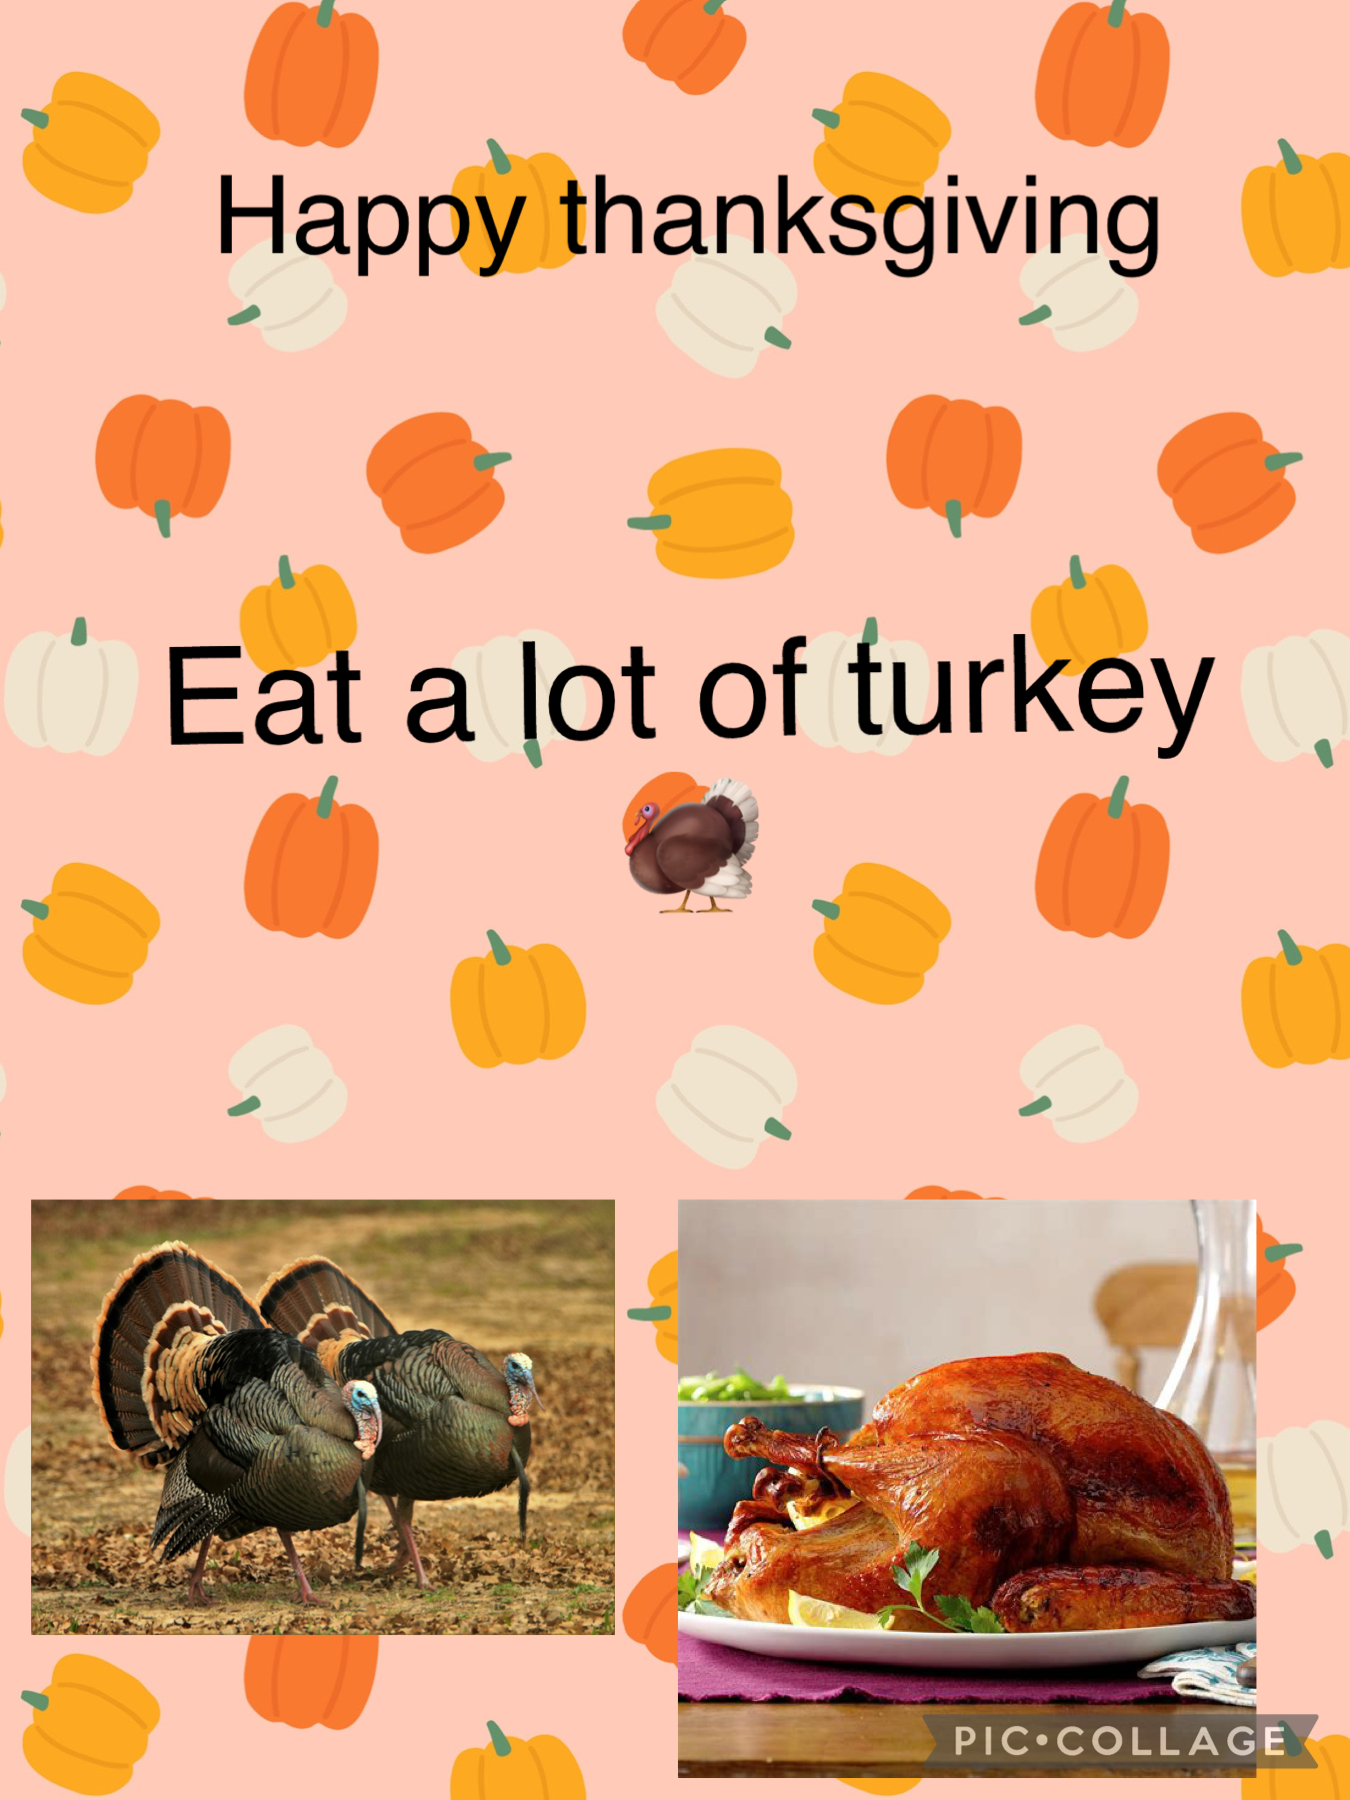 #happy thanksgiving 